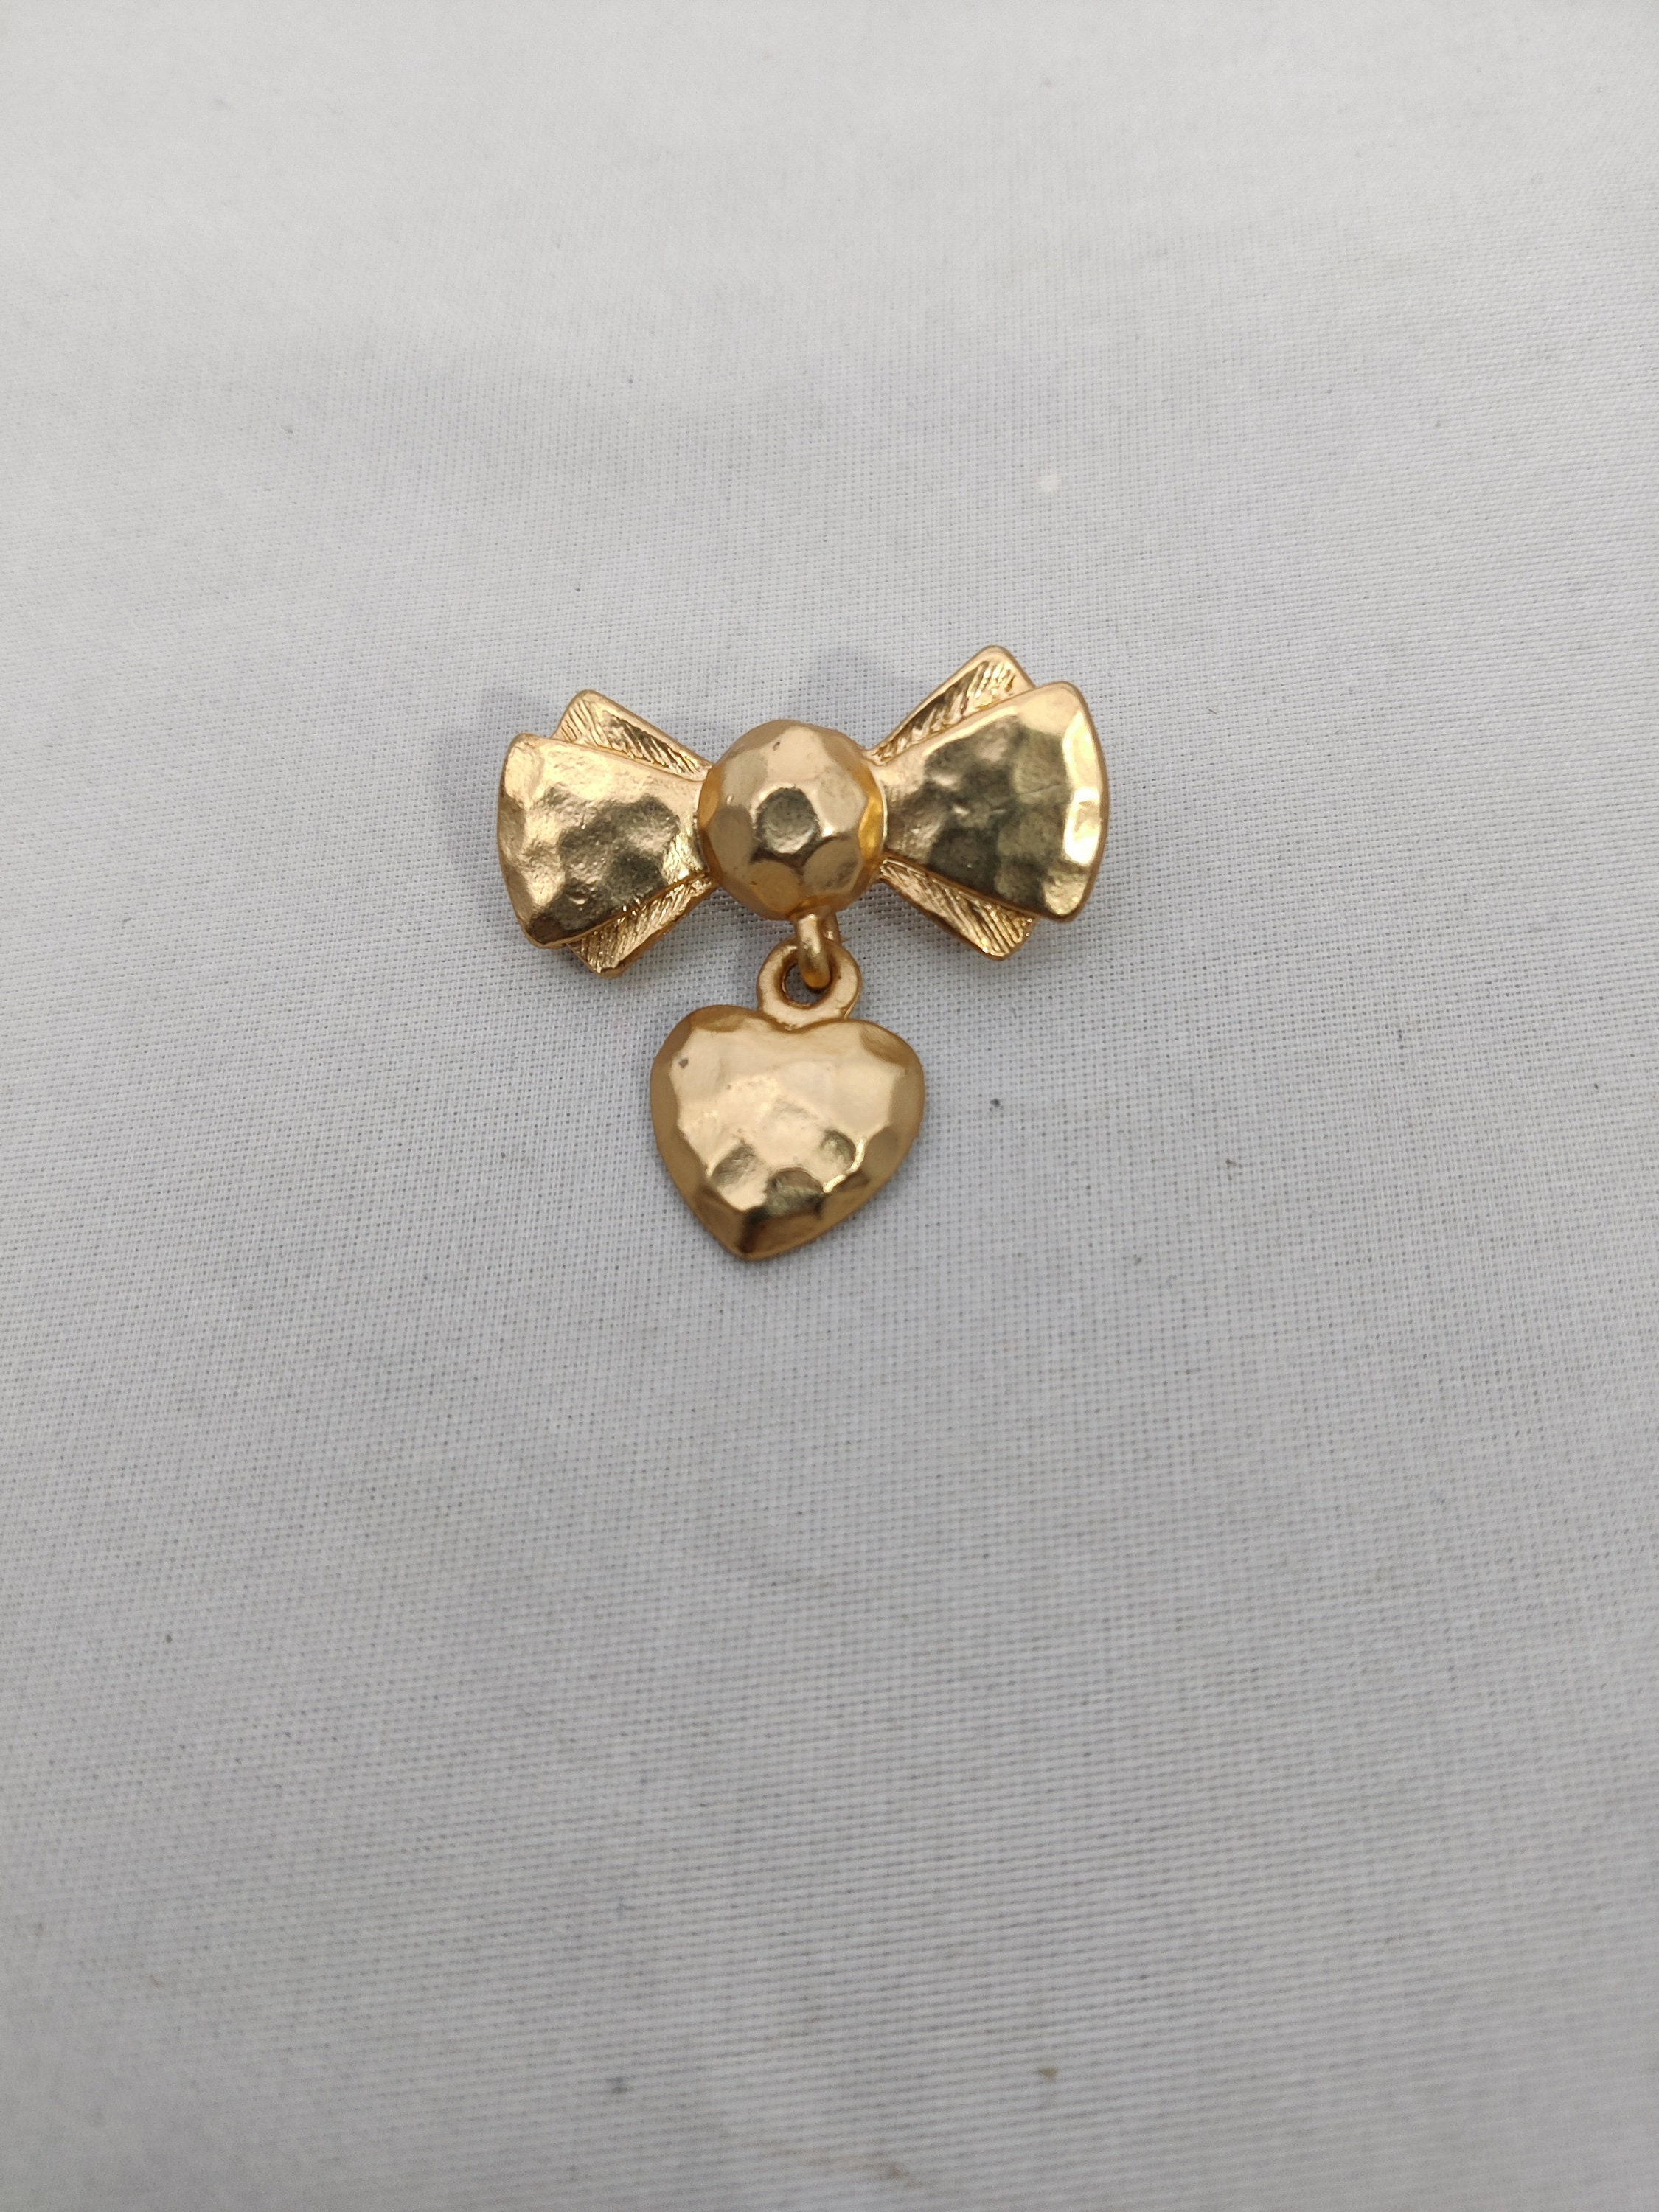 LERITZ Vintage Golden Scarf Ring Shawl Pin Signed Scarf -  Israel